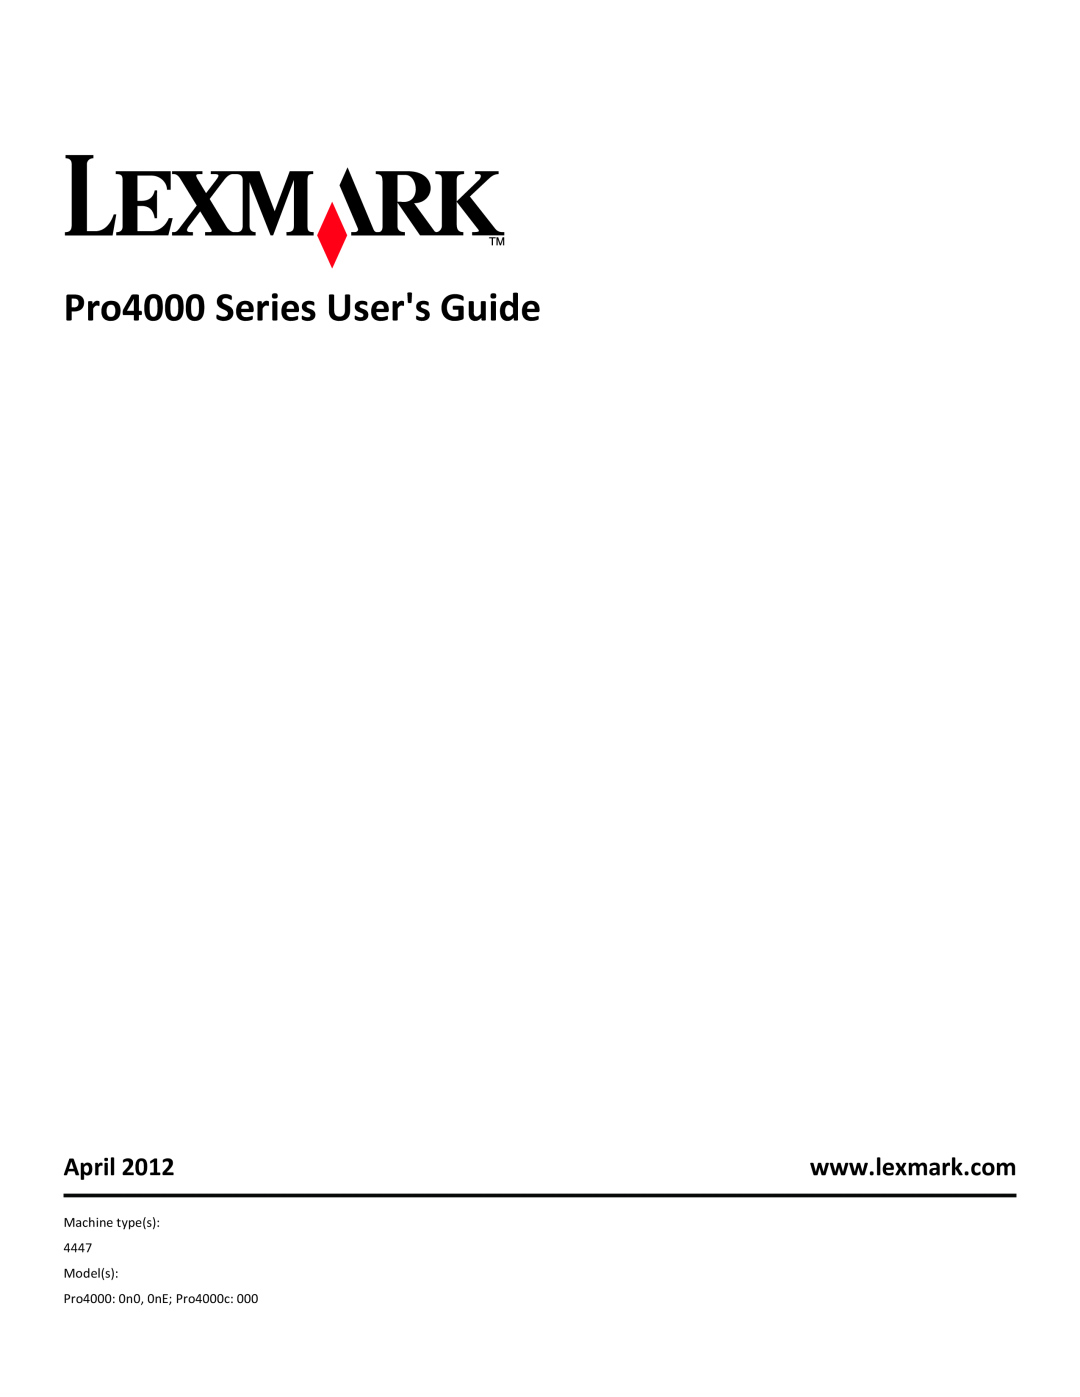 Lexmark PRO4000C, 90P3000 manual Pro4000 Series Users Guide, April 